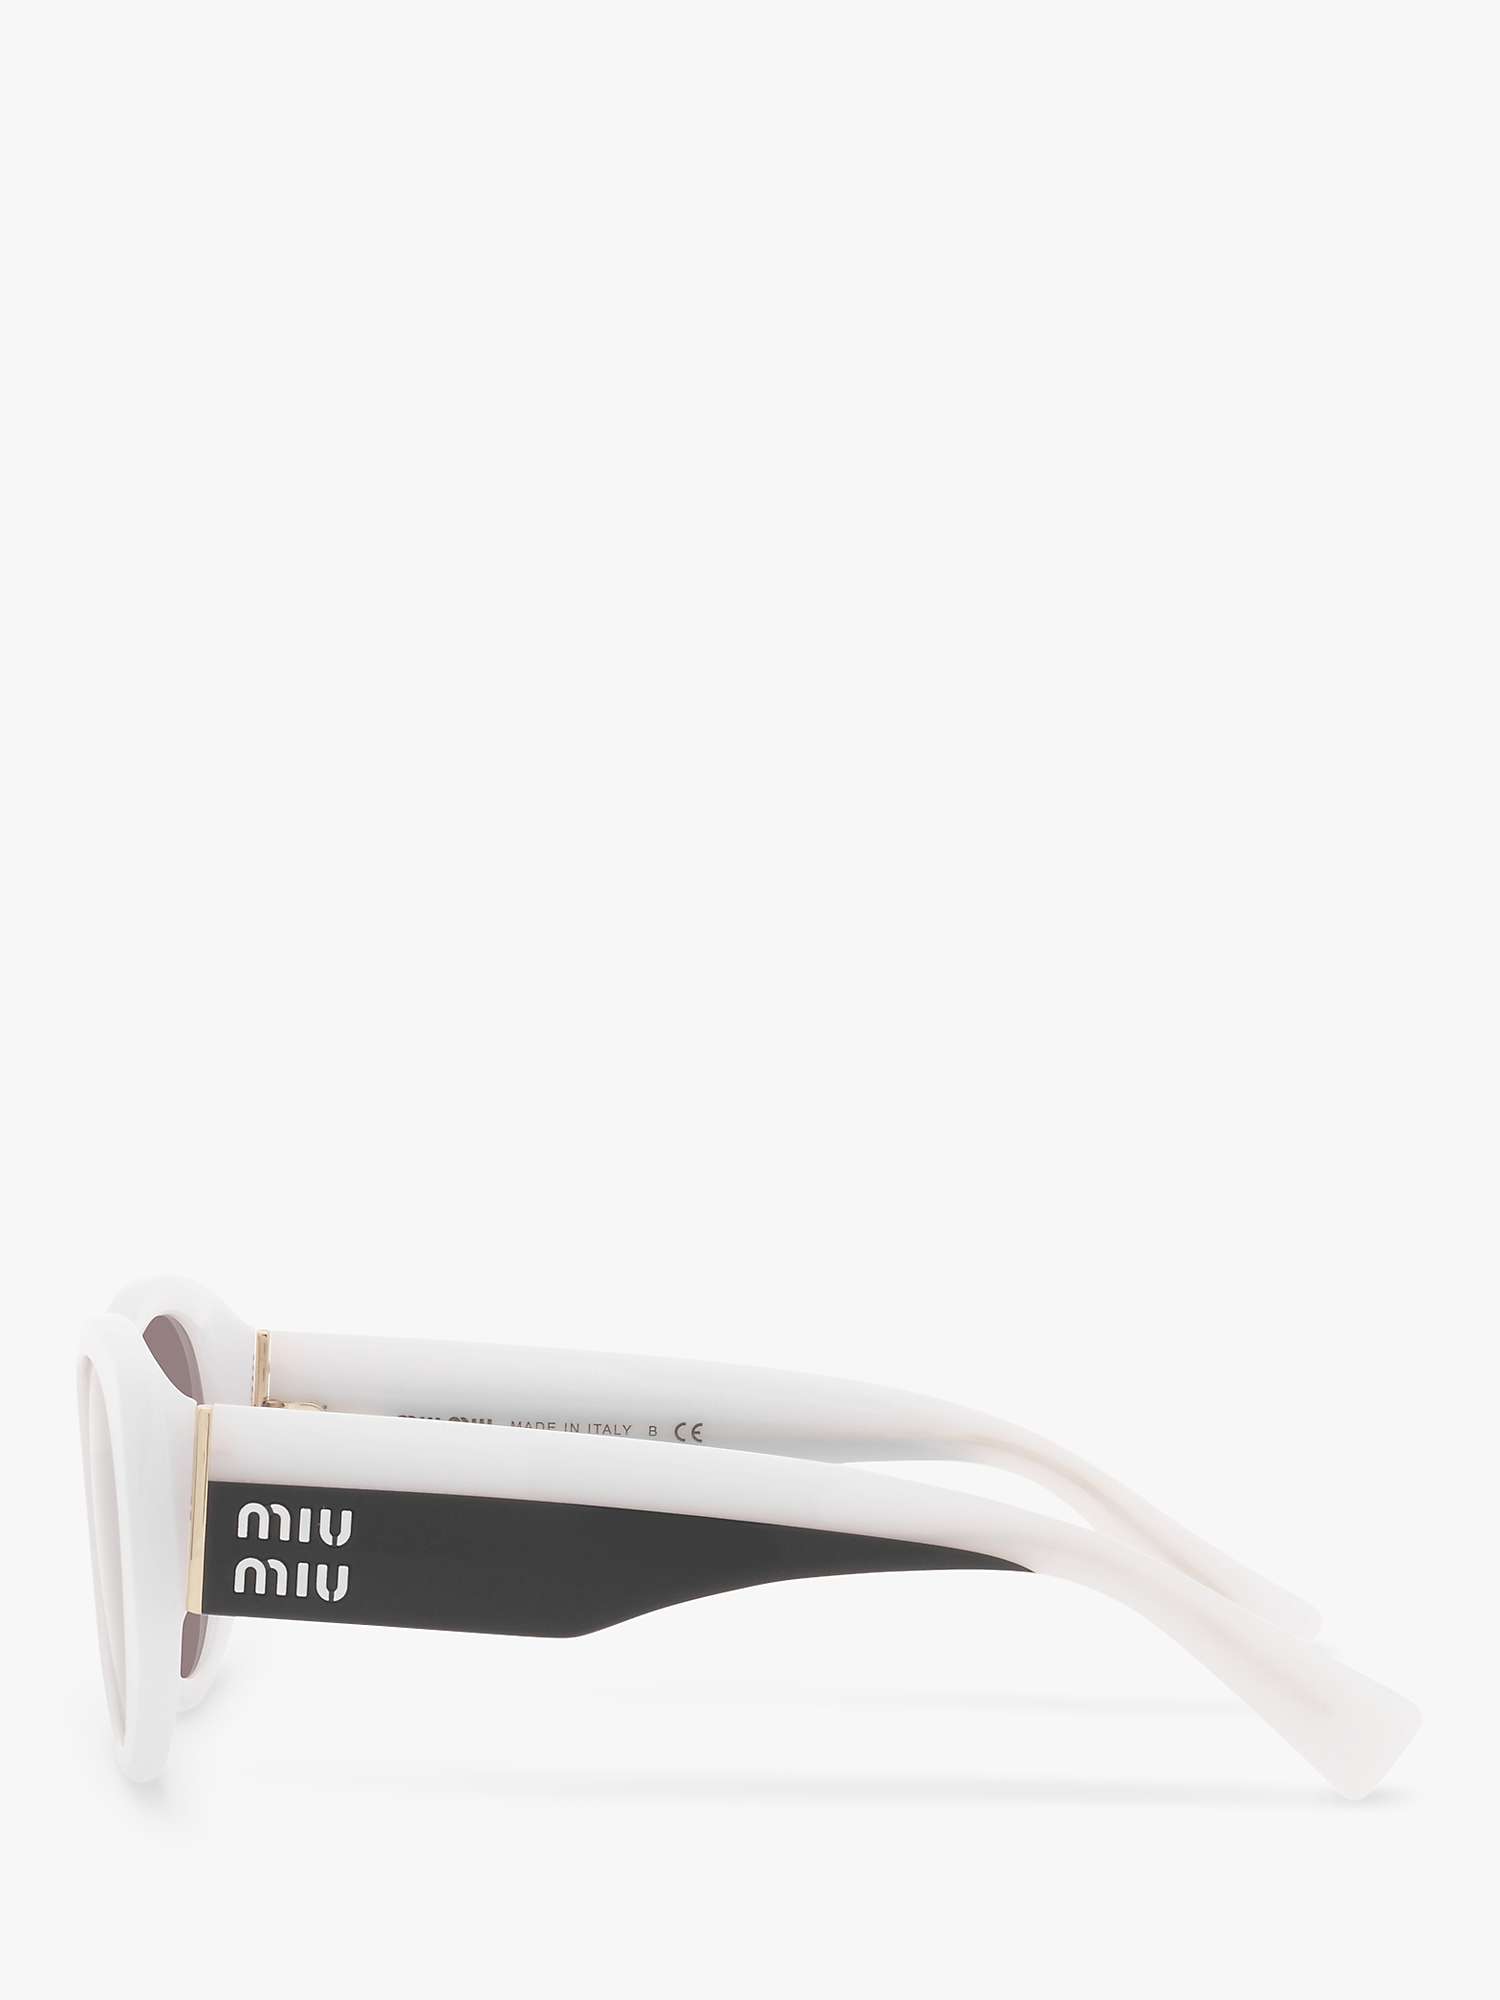 Buy Miu Miu MU 03WS Women's Irregular Sunglasses, White/Grey Online at johnlewis.com